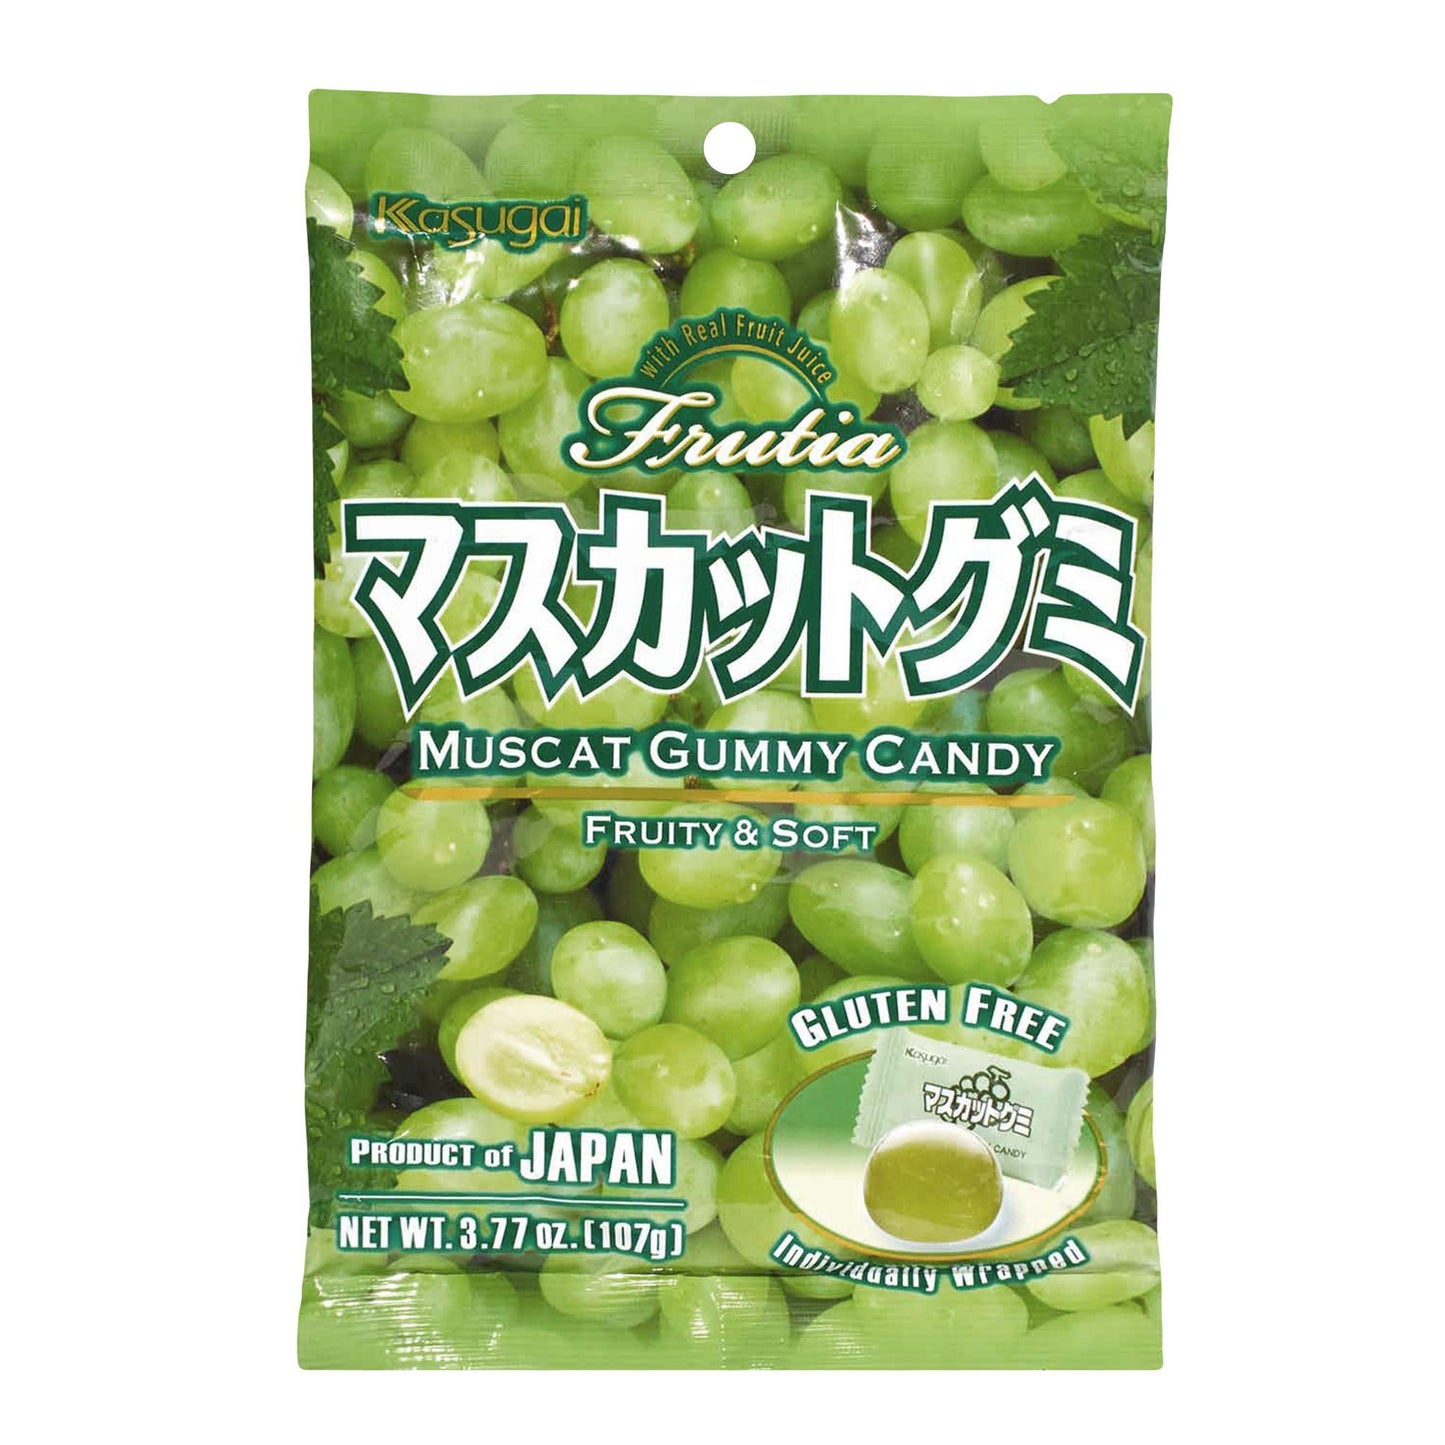 Kasugai Gummy Candy Package | 6-in-1 Box